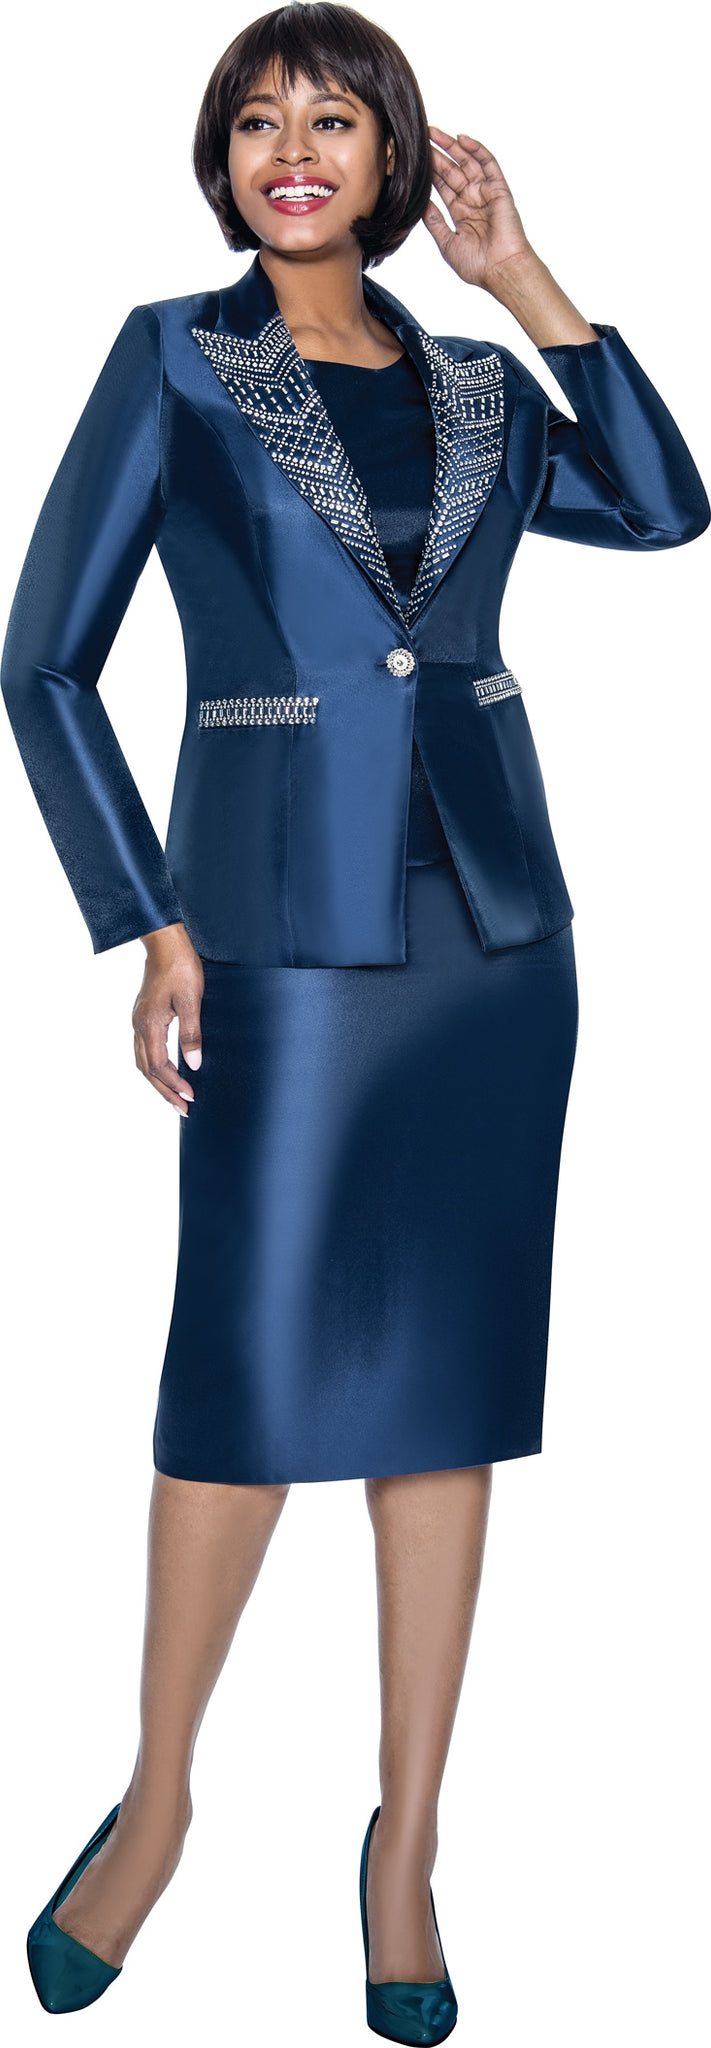 Terramina Church Suit 7023-Navy - Church Suits For Less